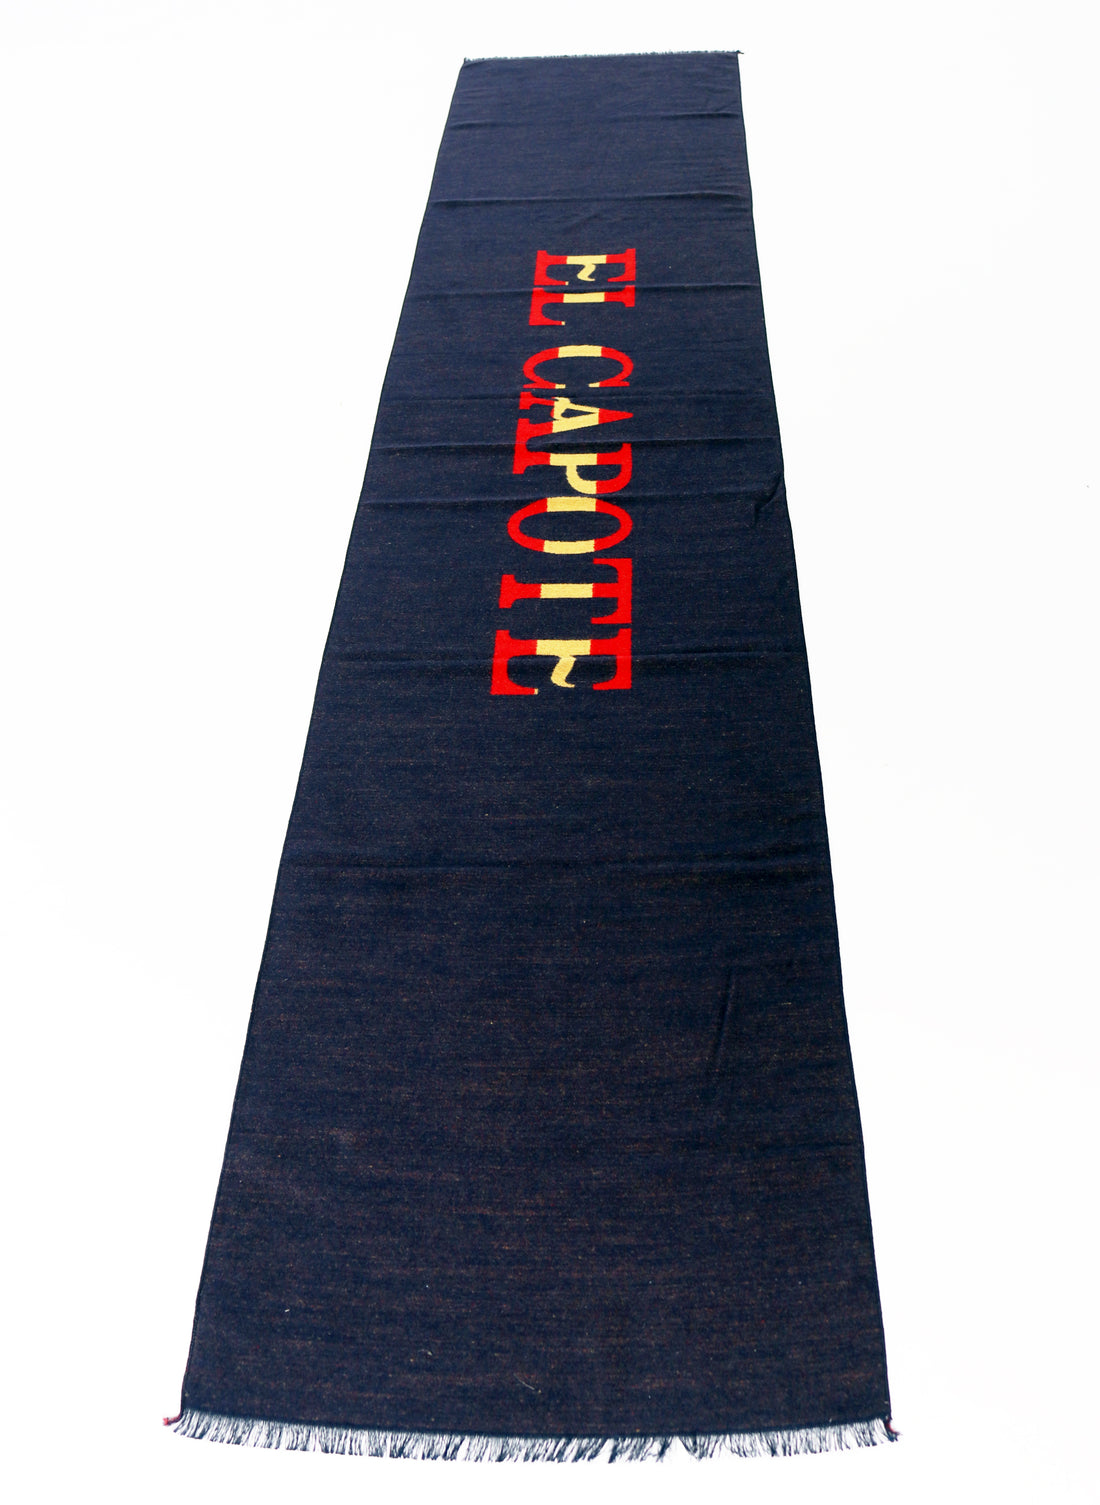 Marineblauwe sjaal van Spanje